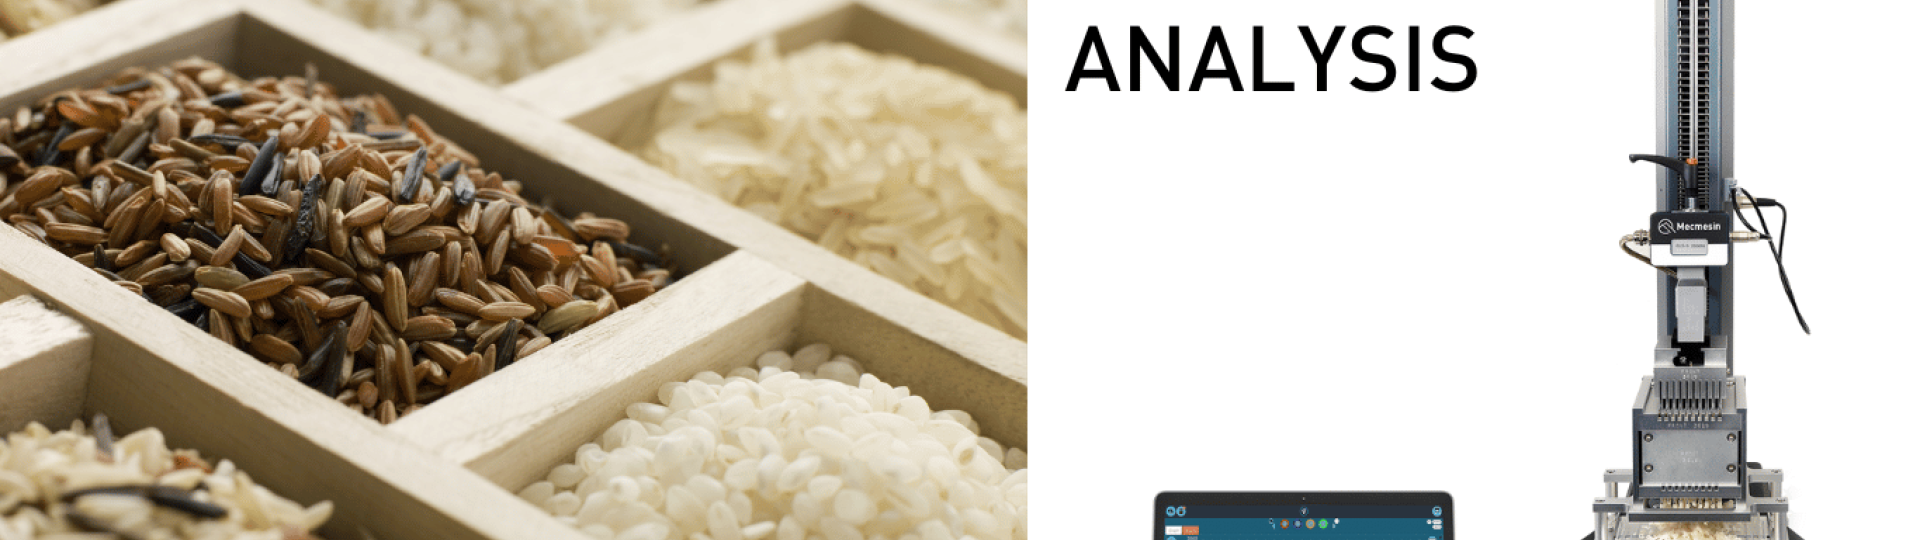 Rice and a Mecmesin Rice Texture Analyzer